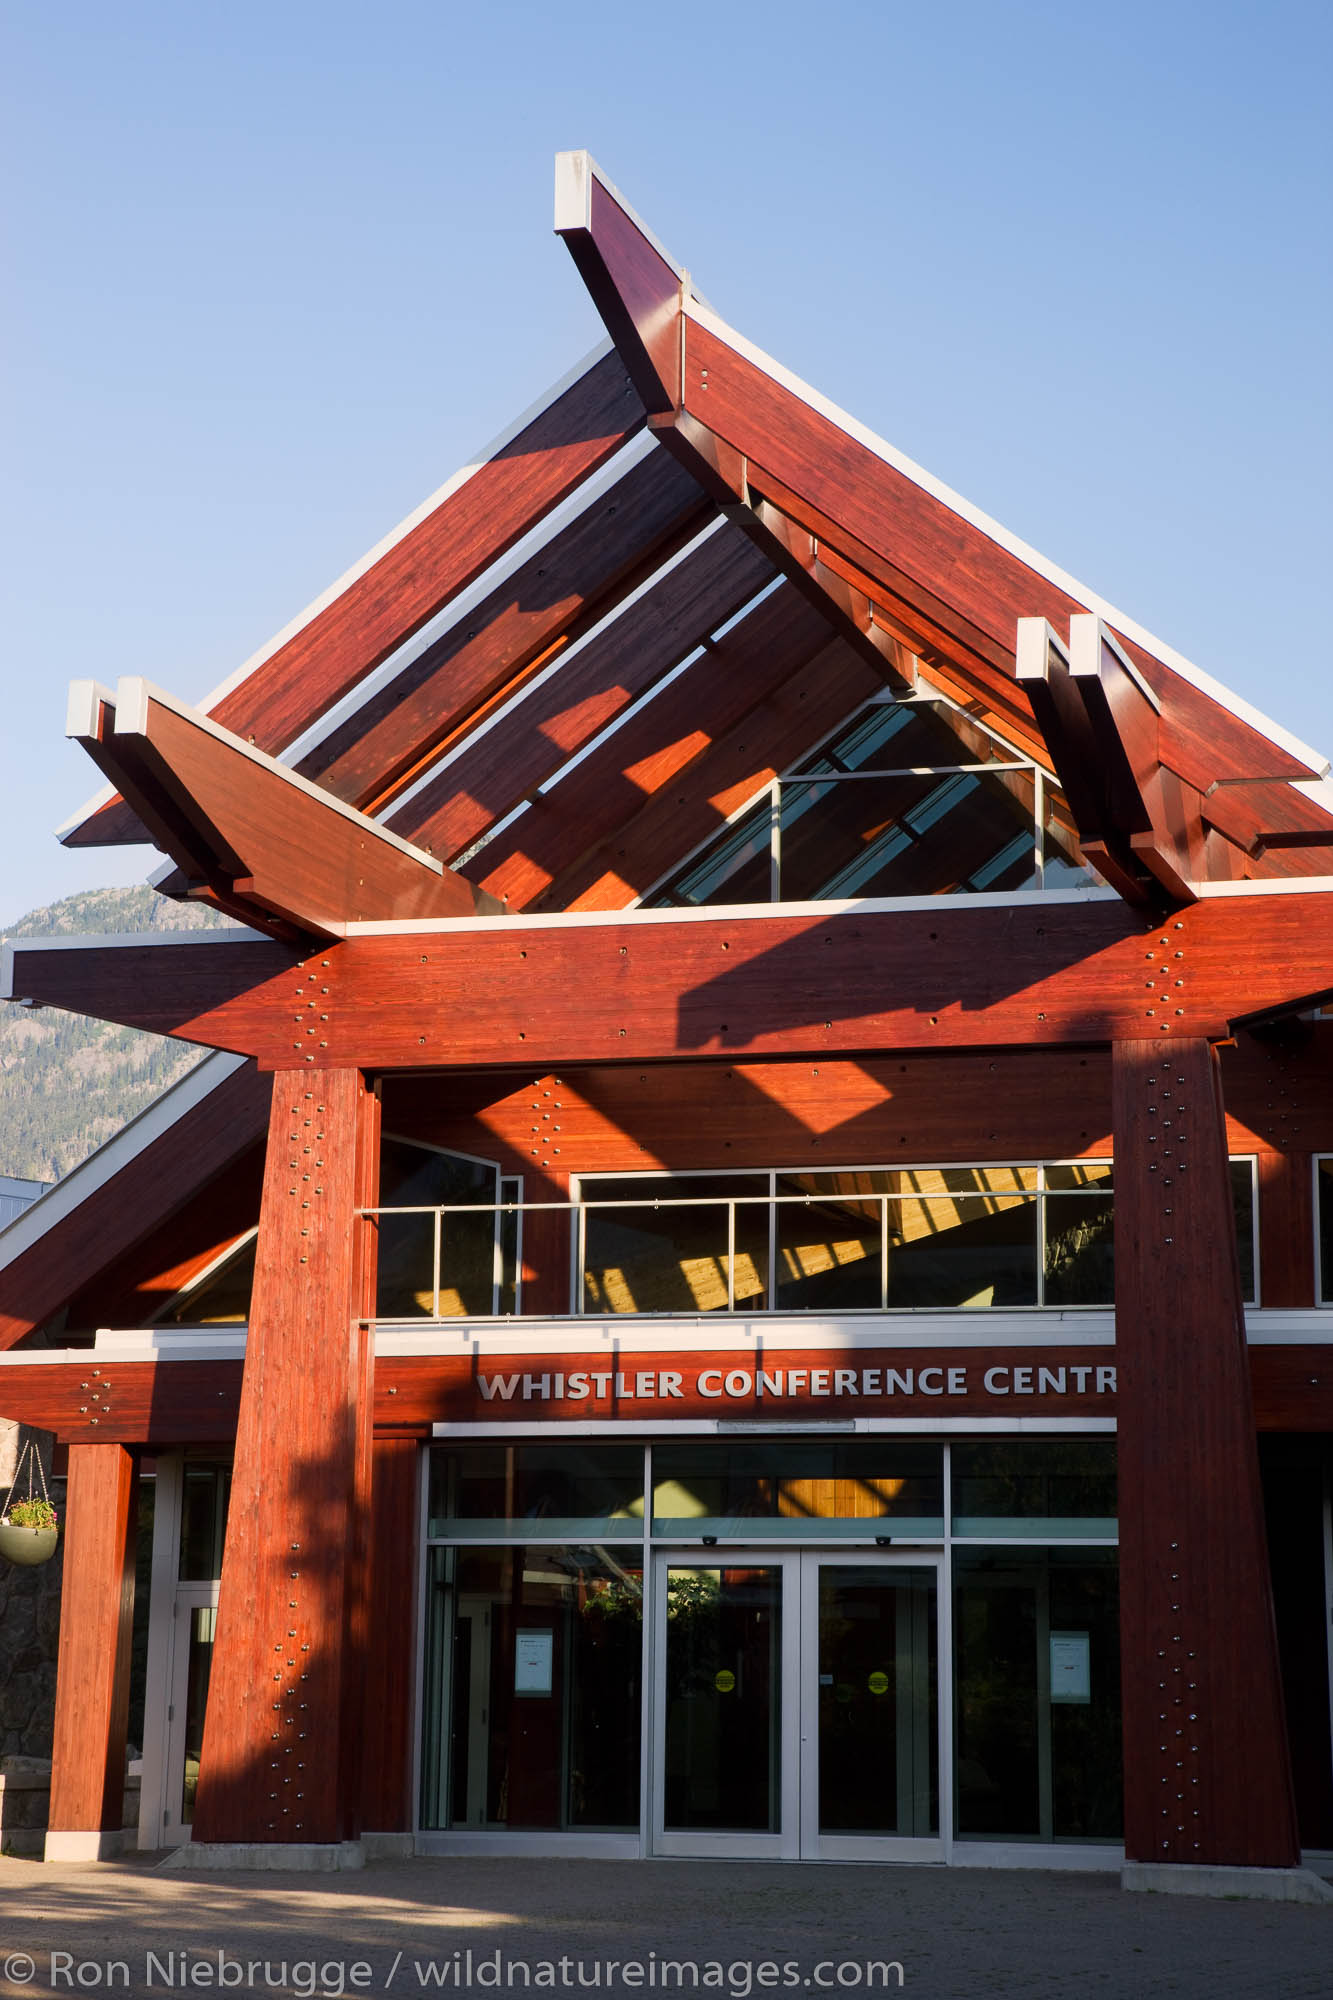 Whistler Conference Centre, Whistler Village, Whistler, British Columbia, Canada.